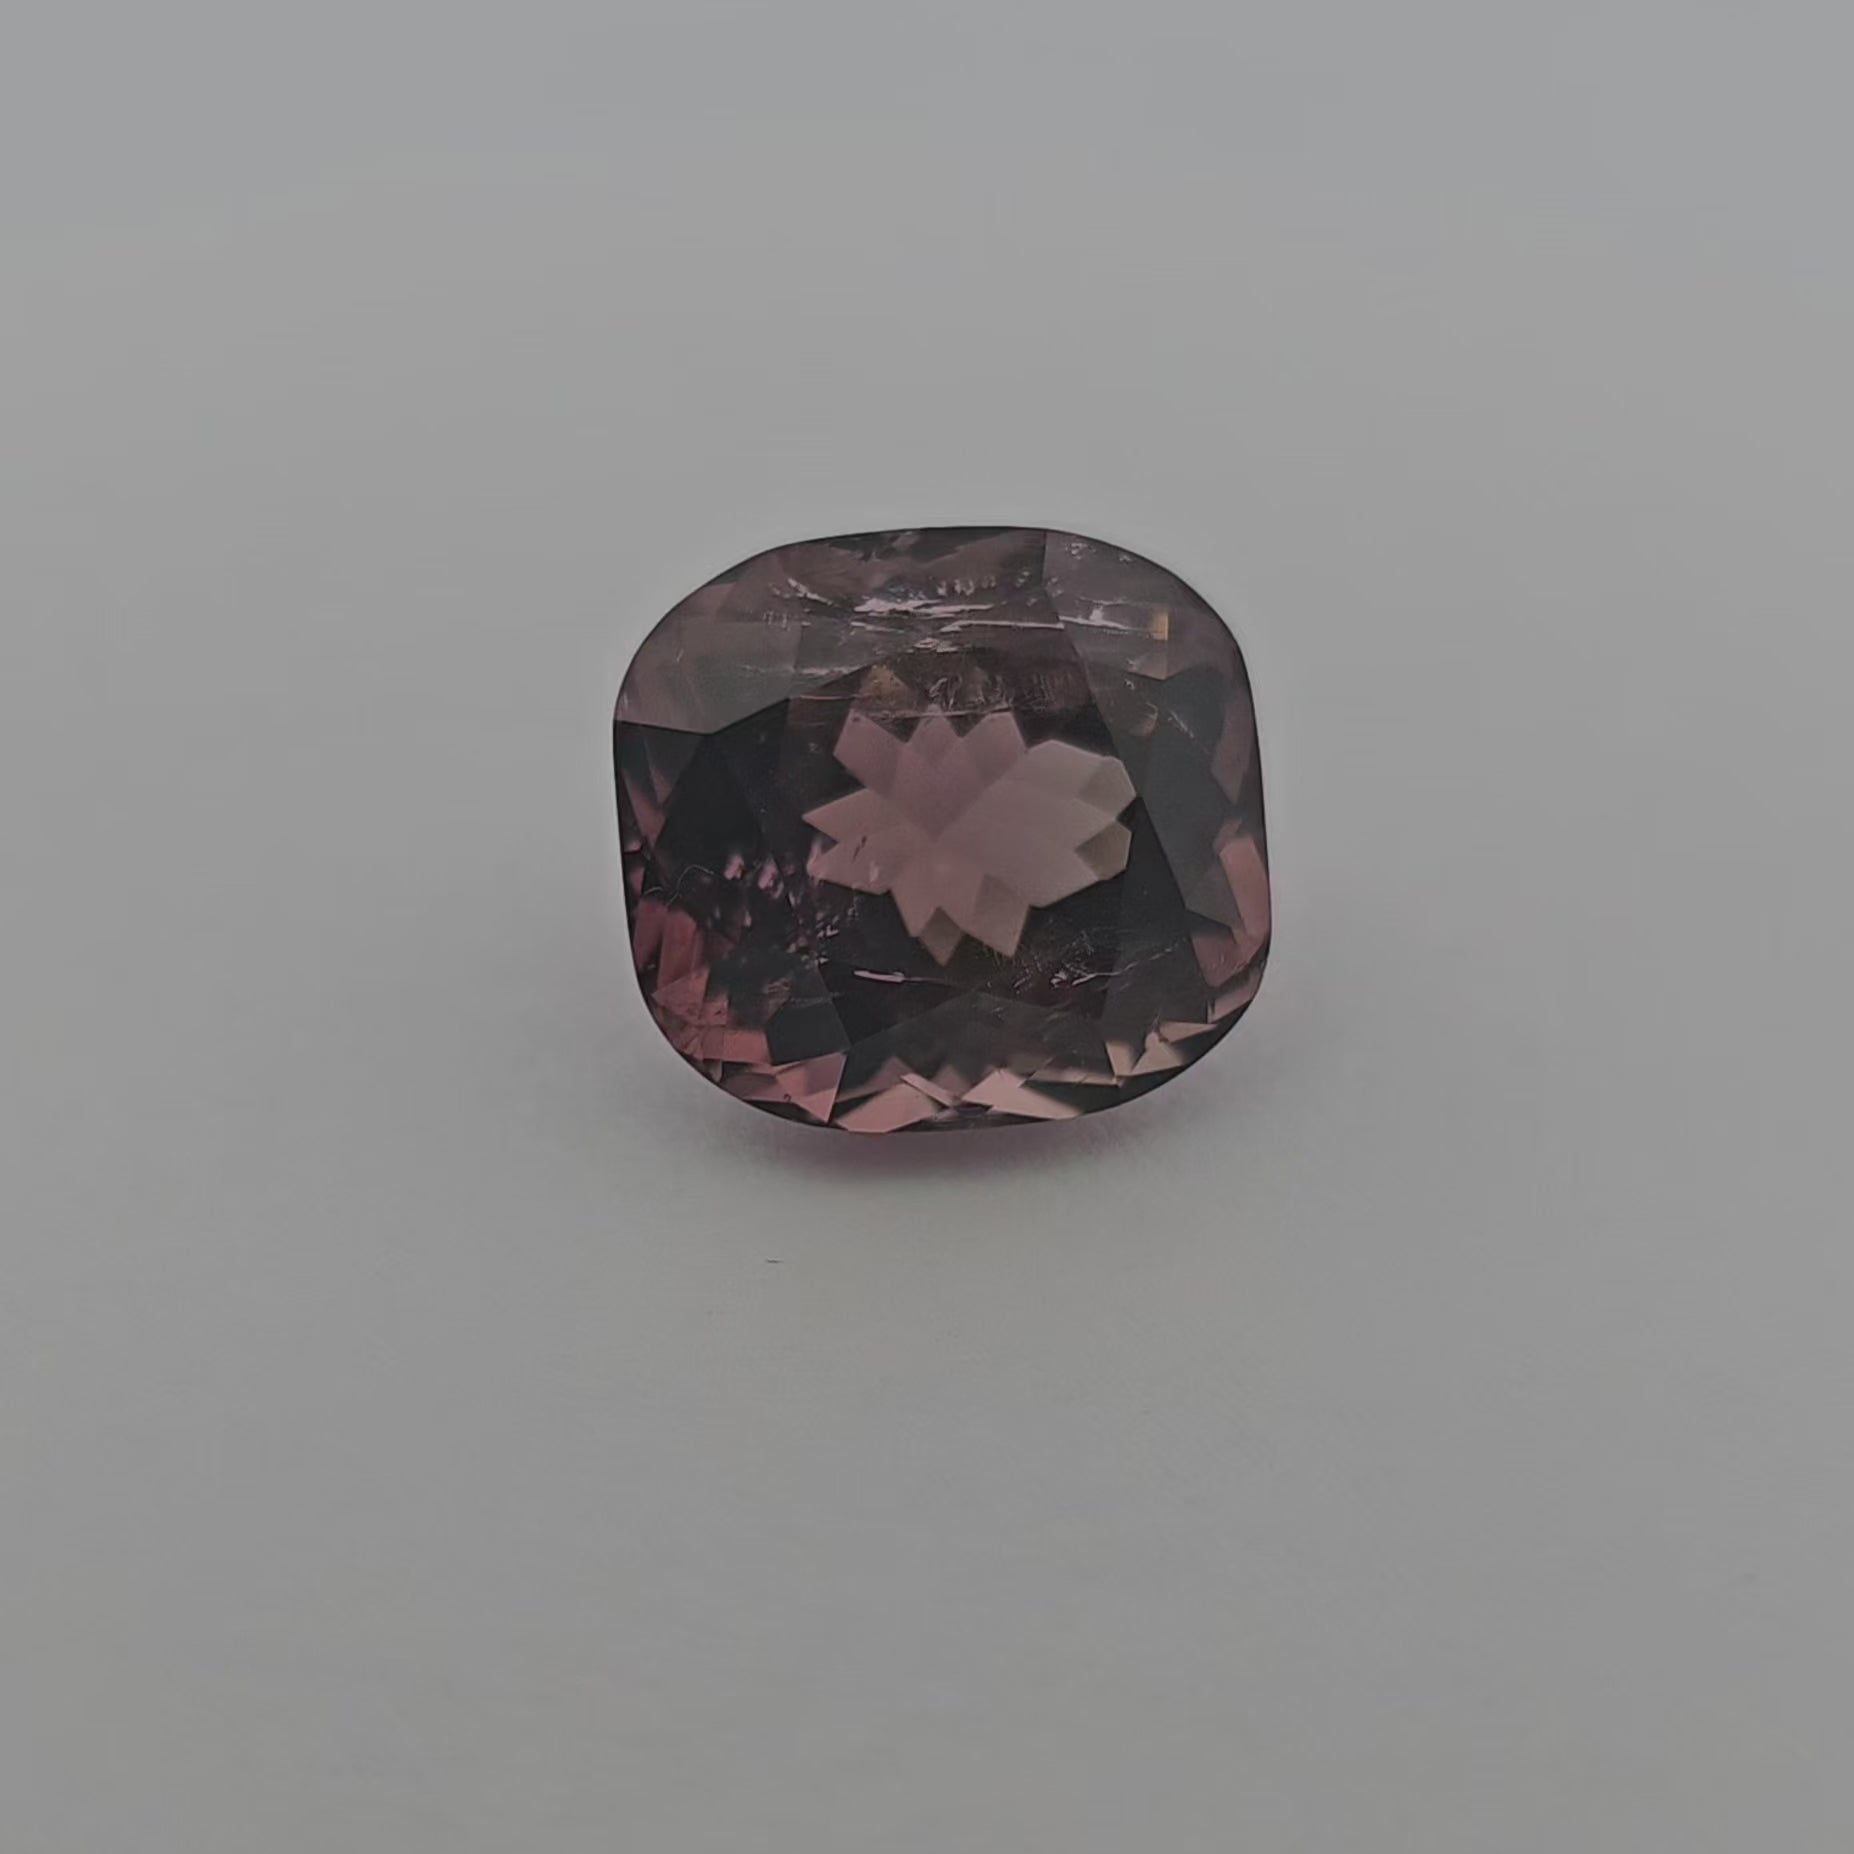 loose Natural Brown Pink Tourmaline Stone 13.33 Carats Cushion Cut (14.2 x 13.1 mm)